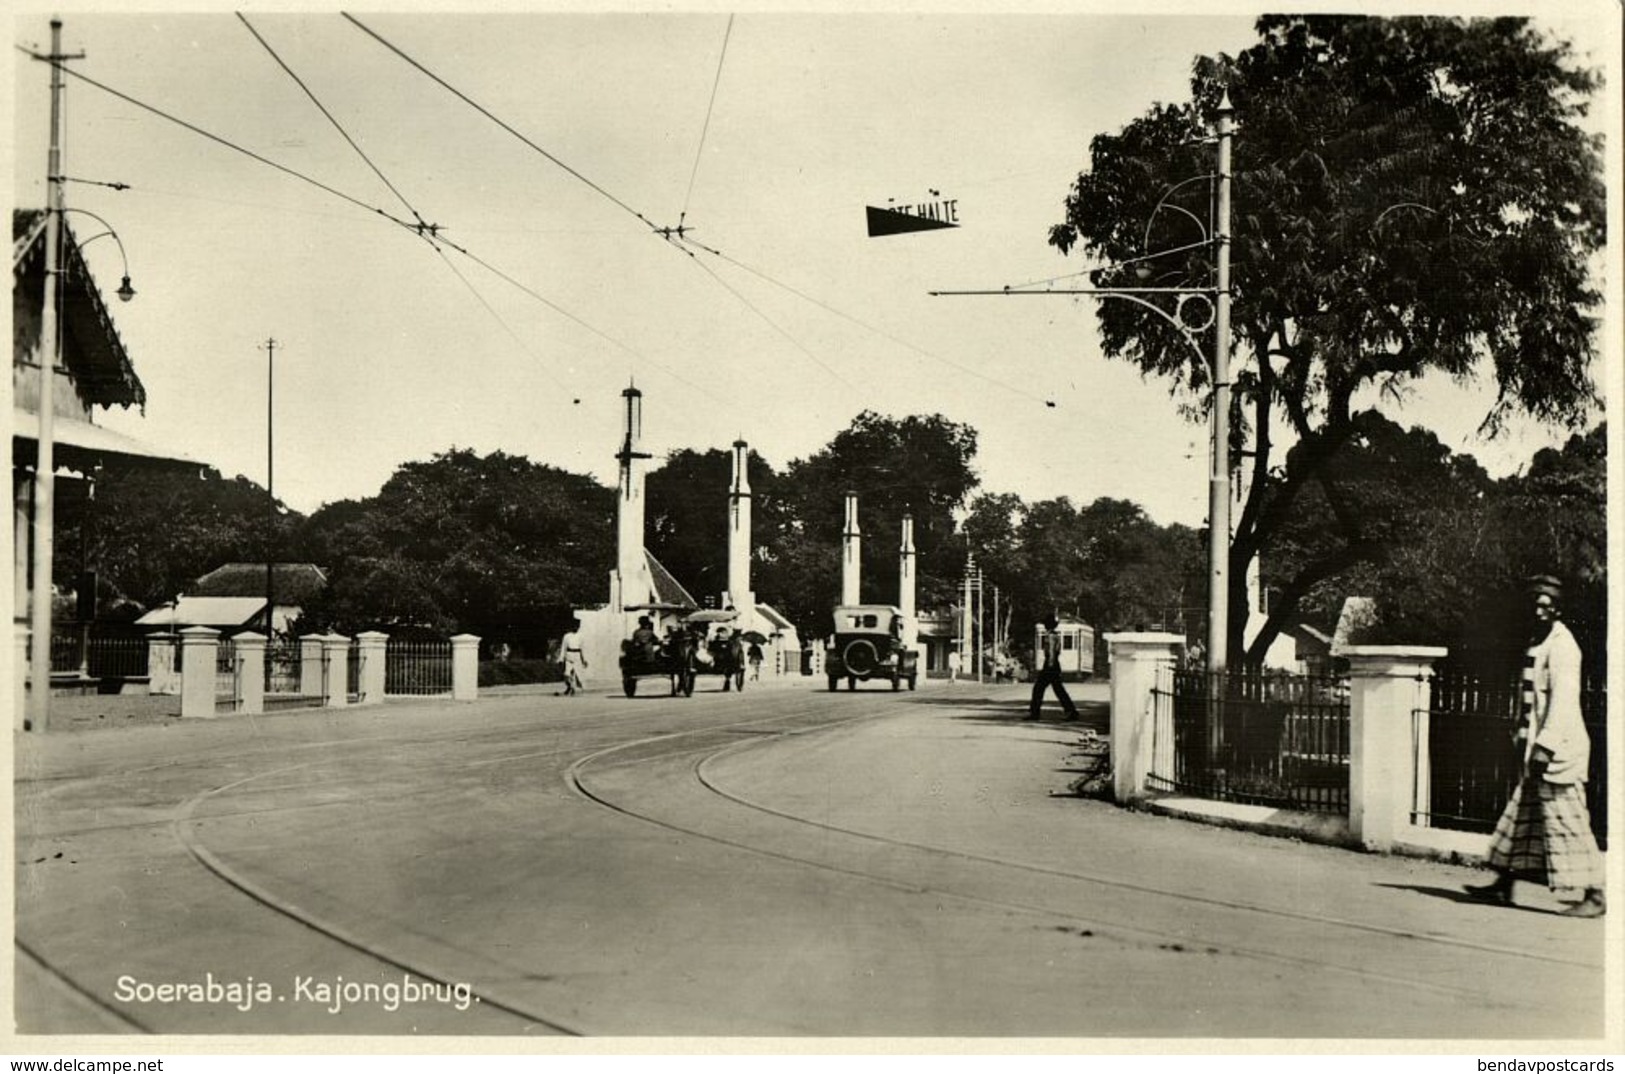 Indonesia, JAVA SOERABAIA, Kajong Bridge, Car (1920s) Postcard - Indonesia